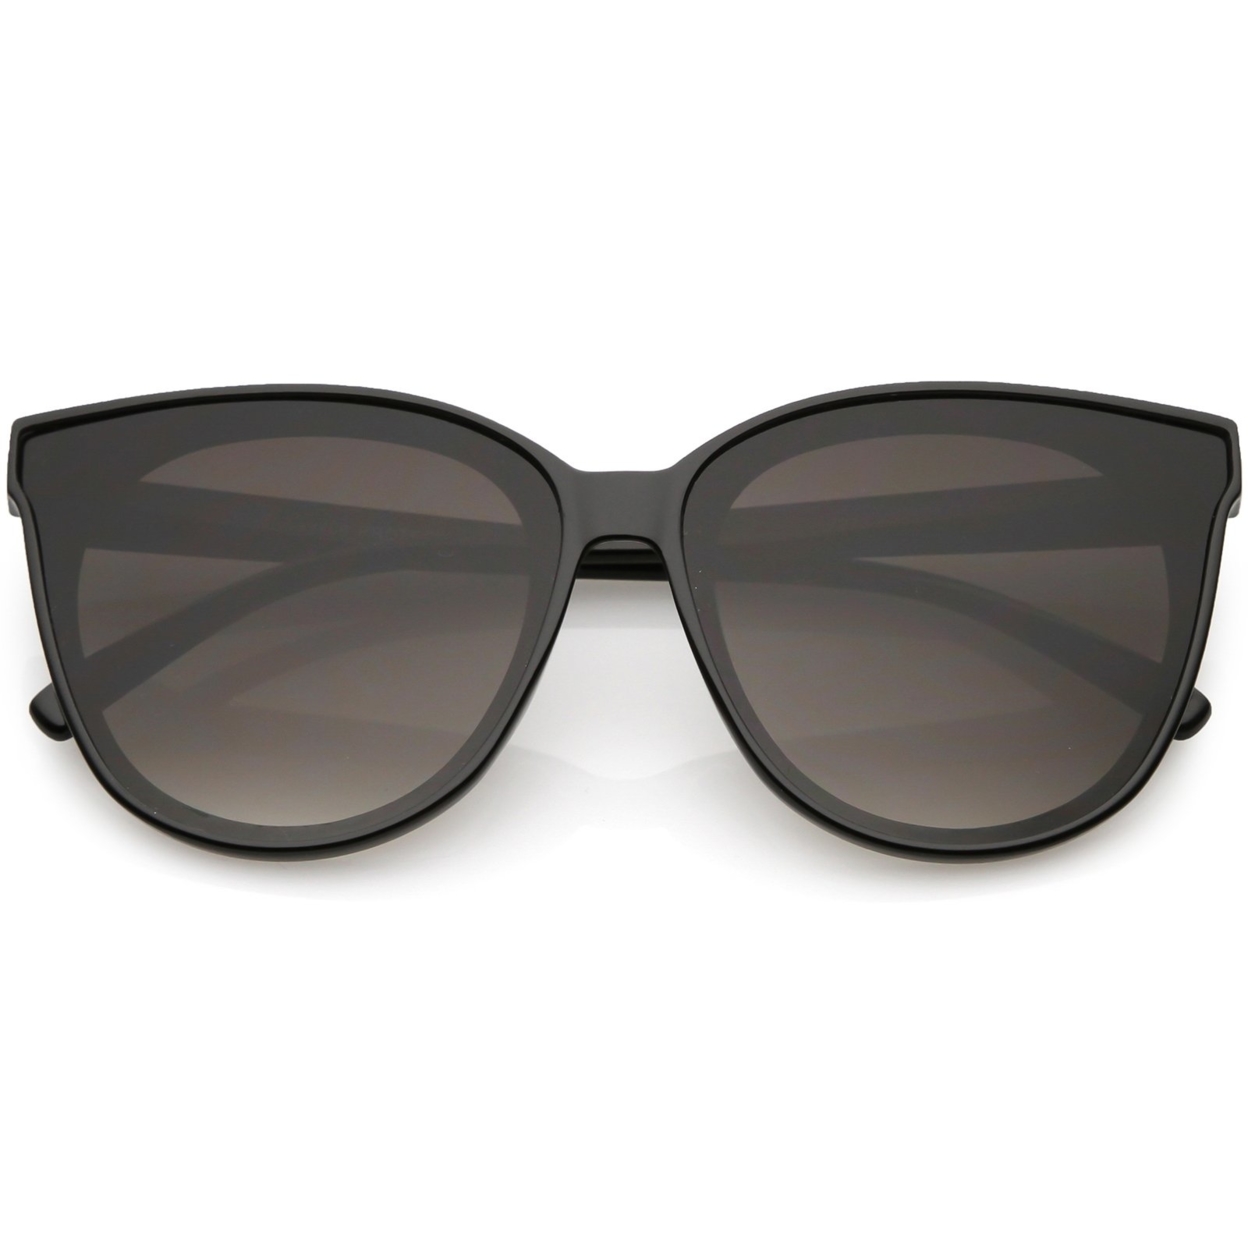 Oversize Cat Eye Sunglasses Neutral Color Flat Lens 60mm - Black / Lavender